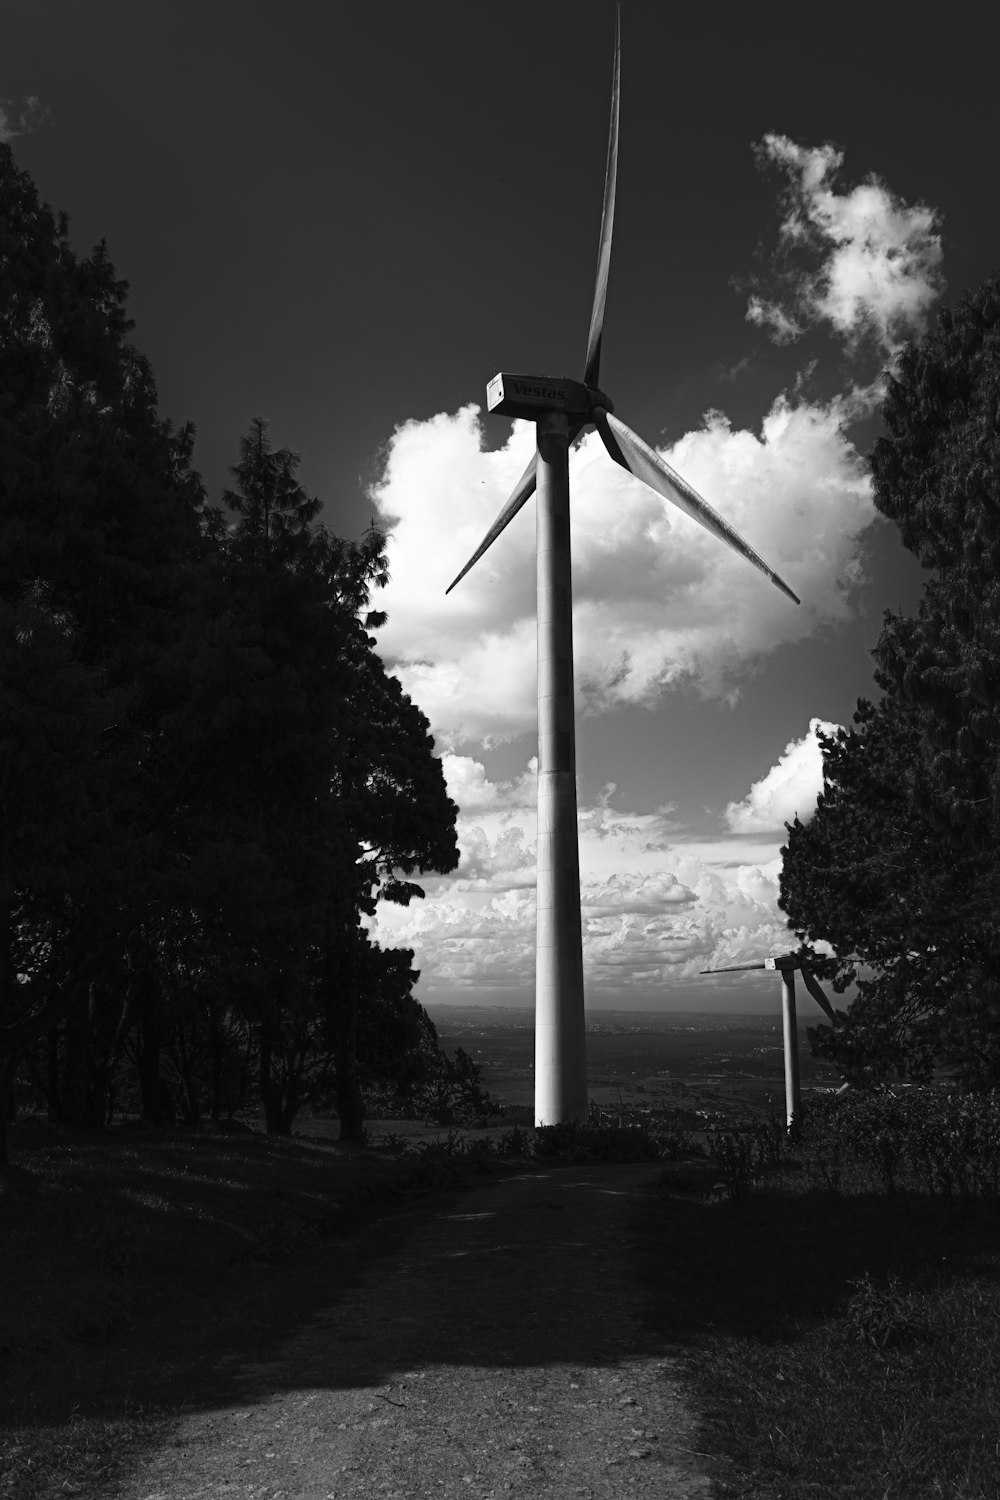 a black and white photo of a wind turbine